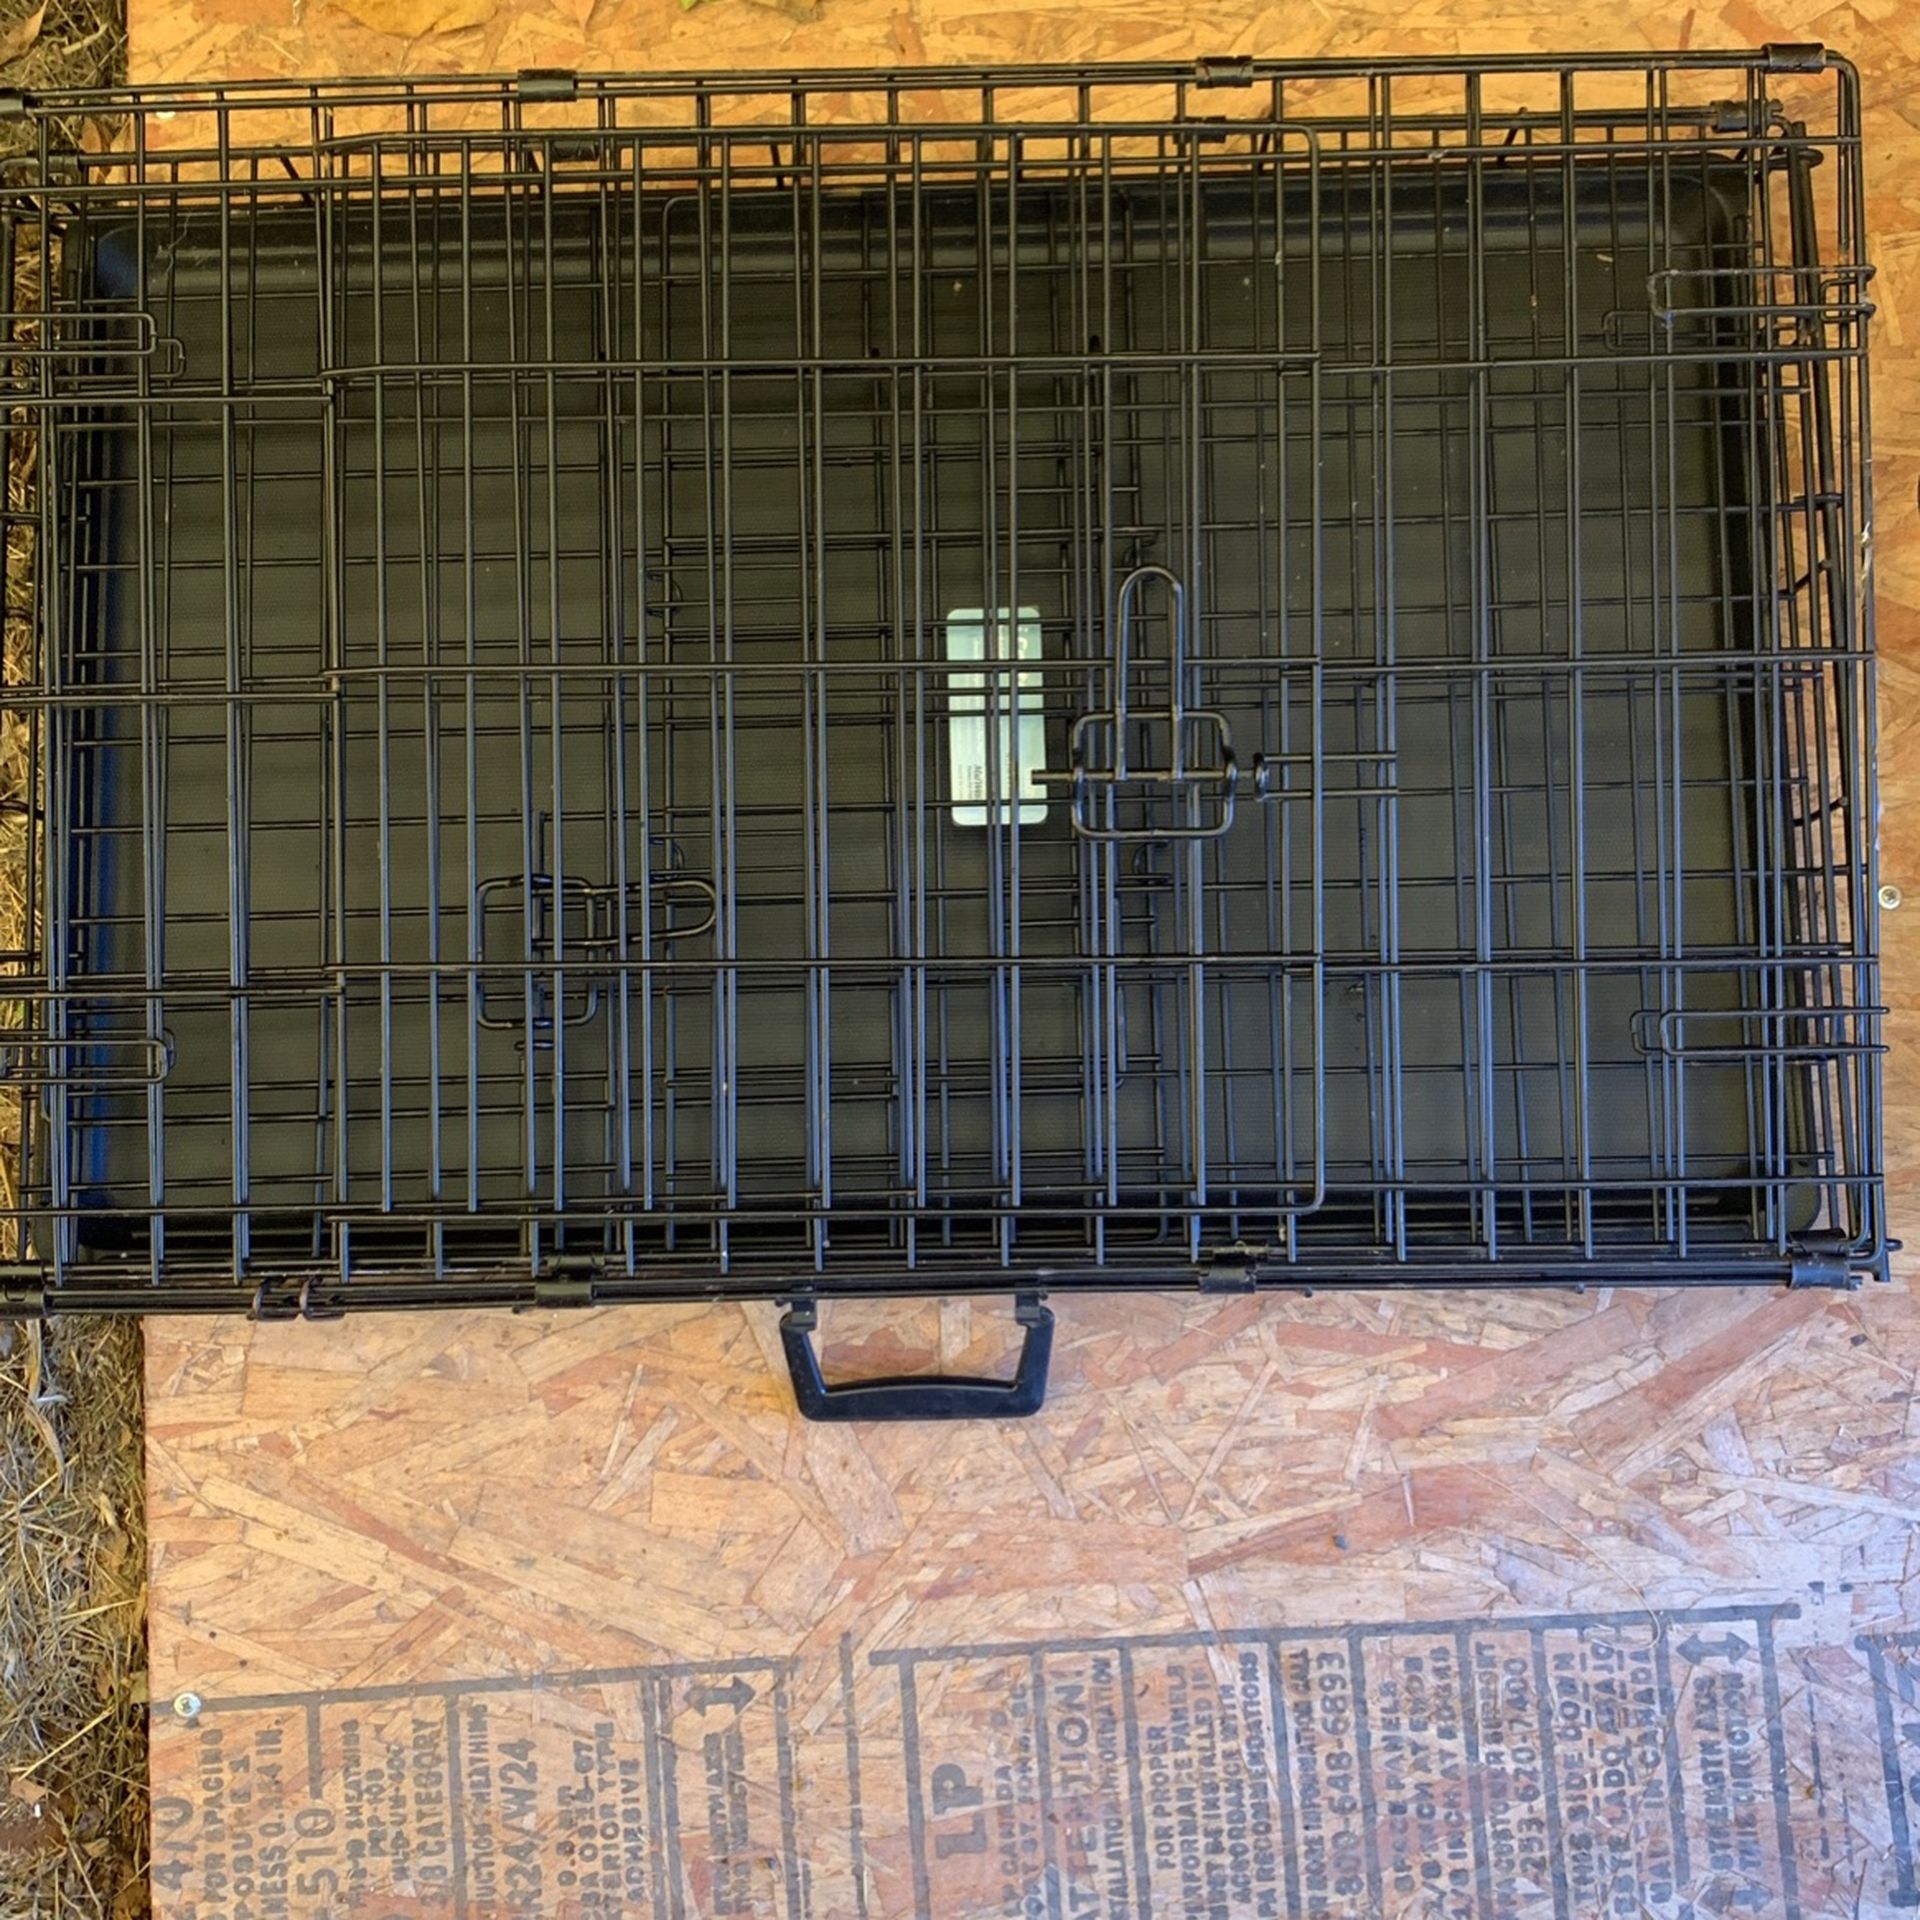 Medium Collapsible Dog Crate